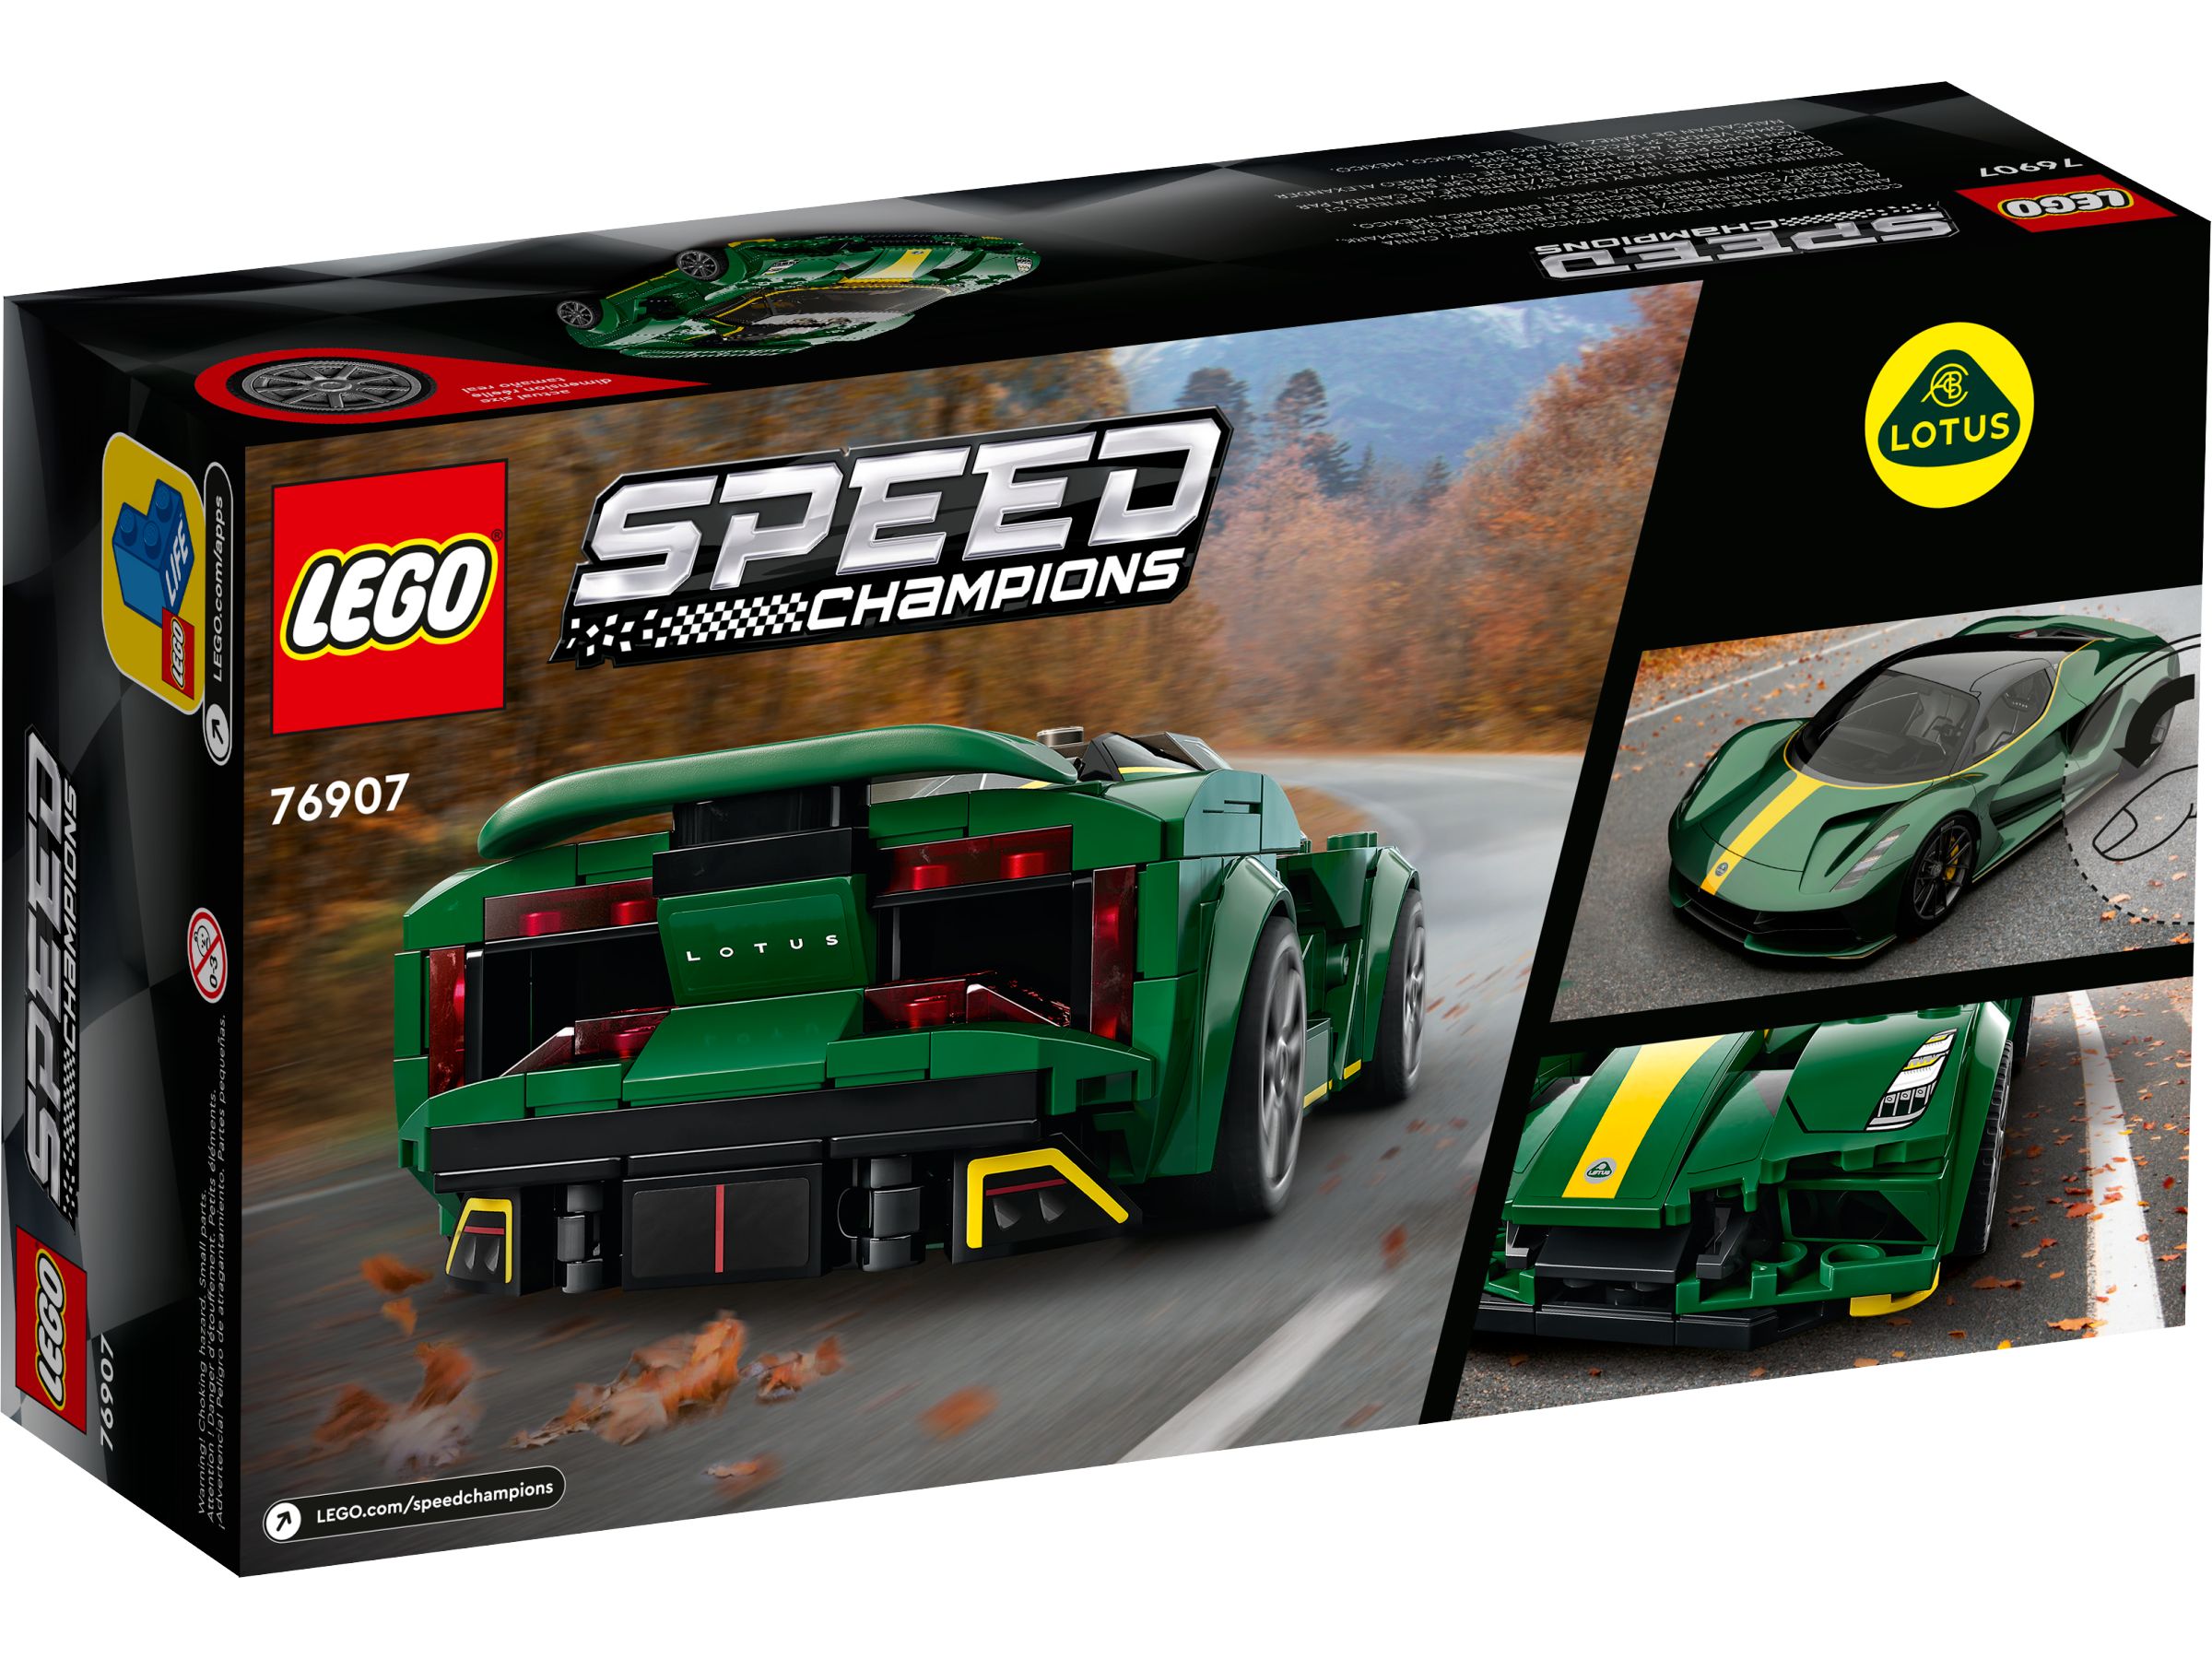 LEGO Speed Champions 76907 Lotus Evija LEGO_76907_alt2.jpg